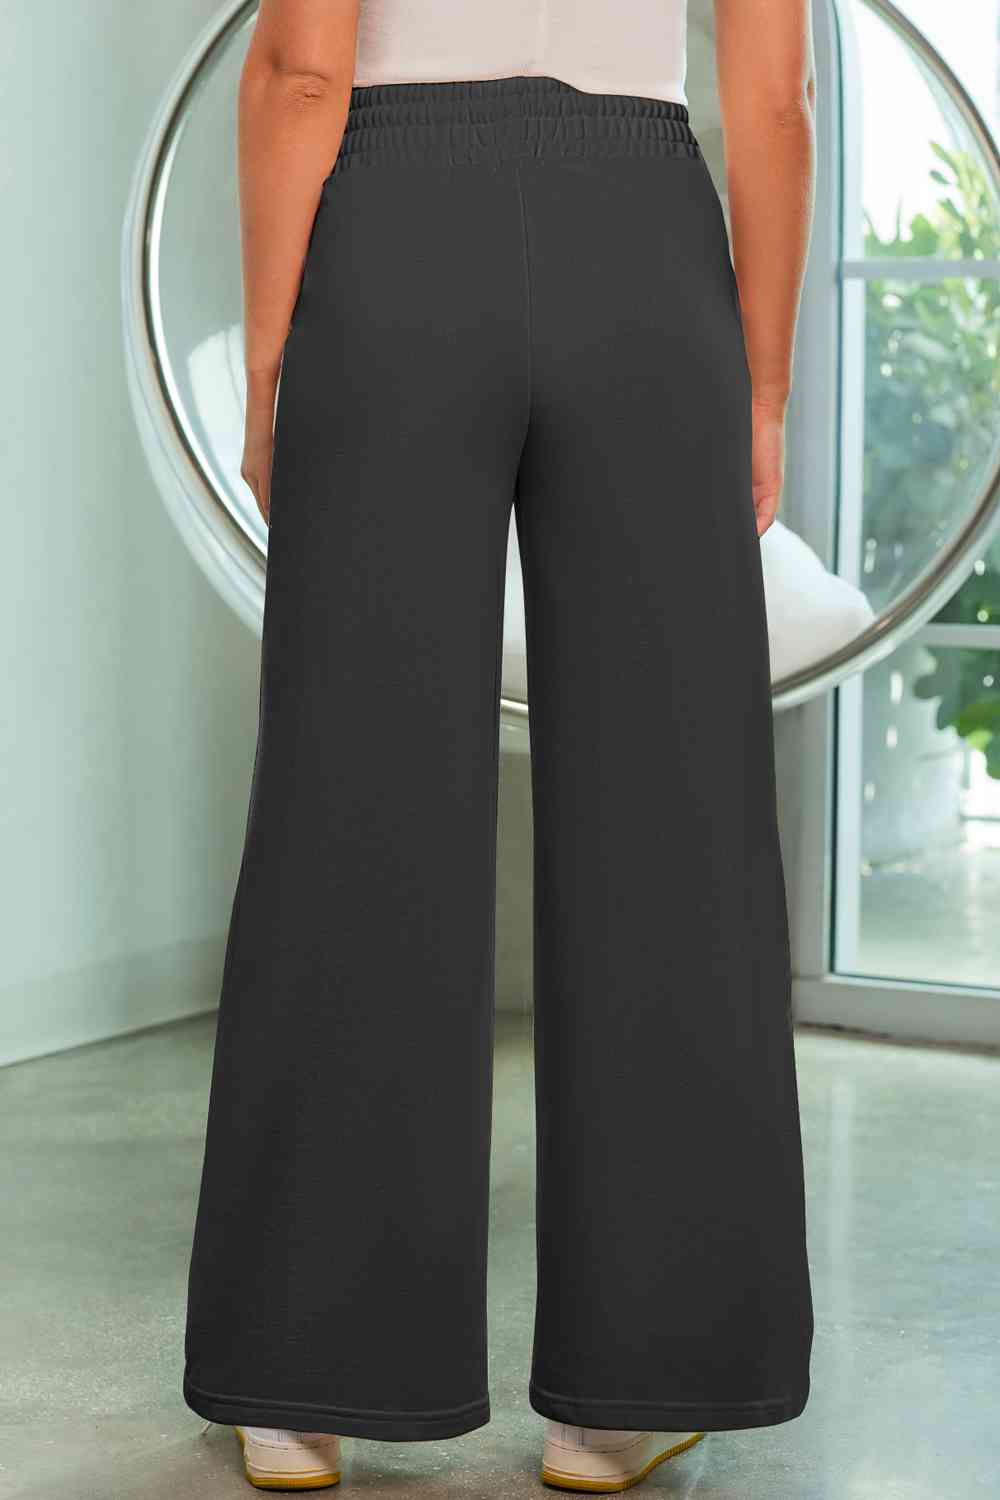 Soft Surroundings Pants XL Black Elastic Waistband Straight Leg